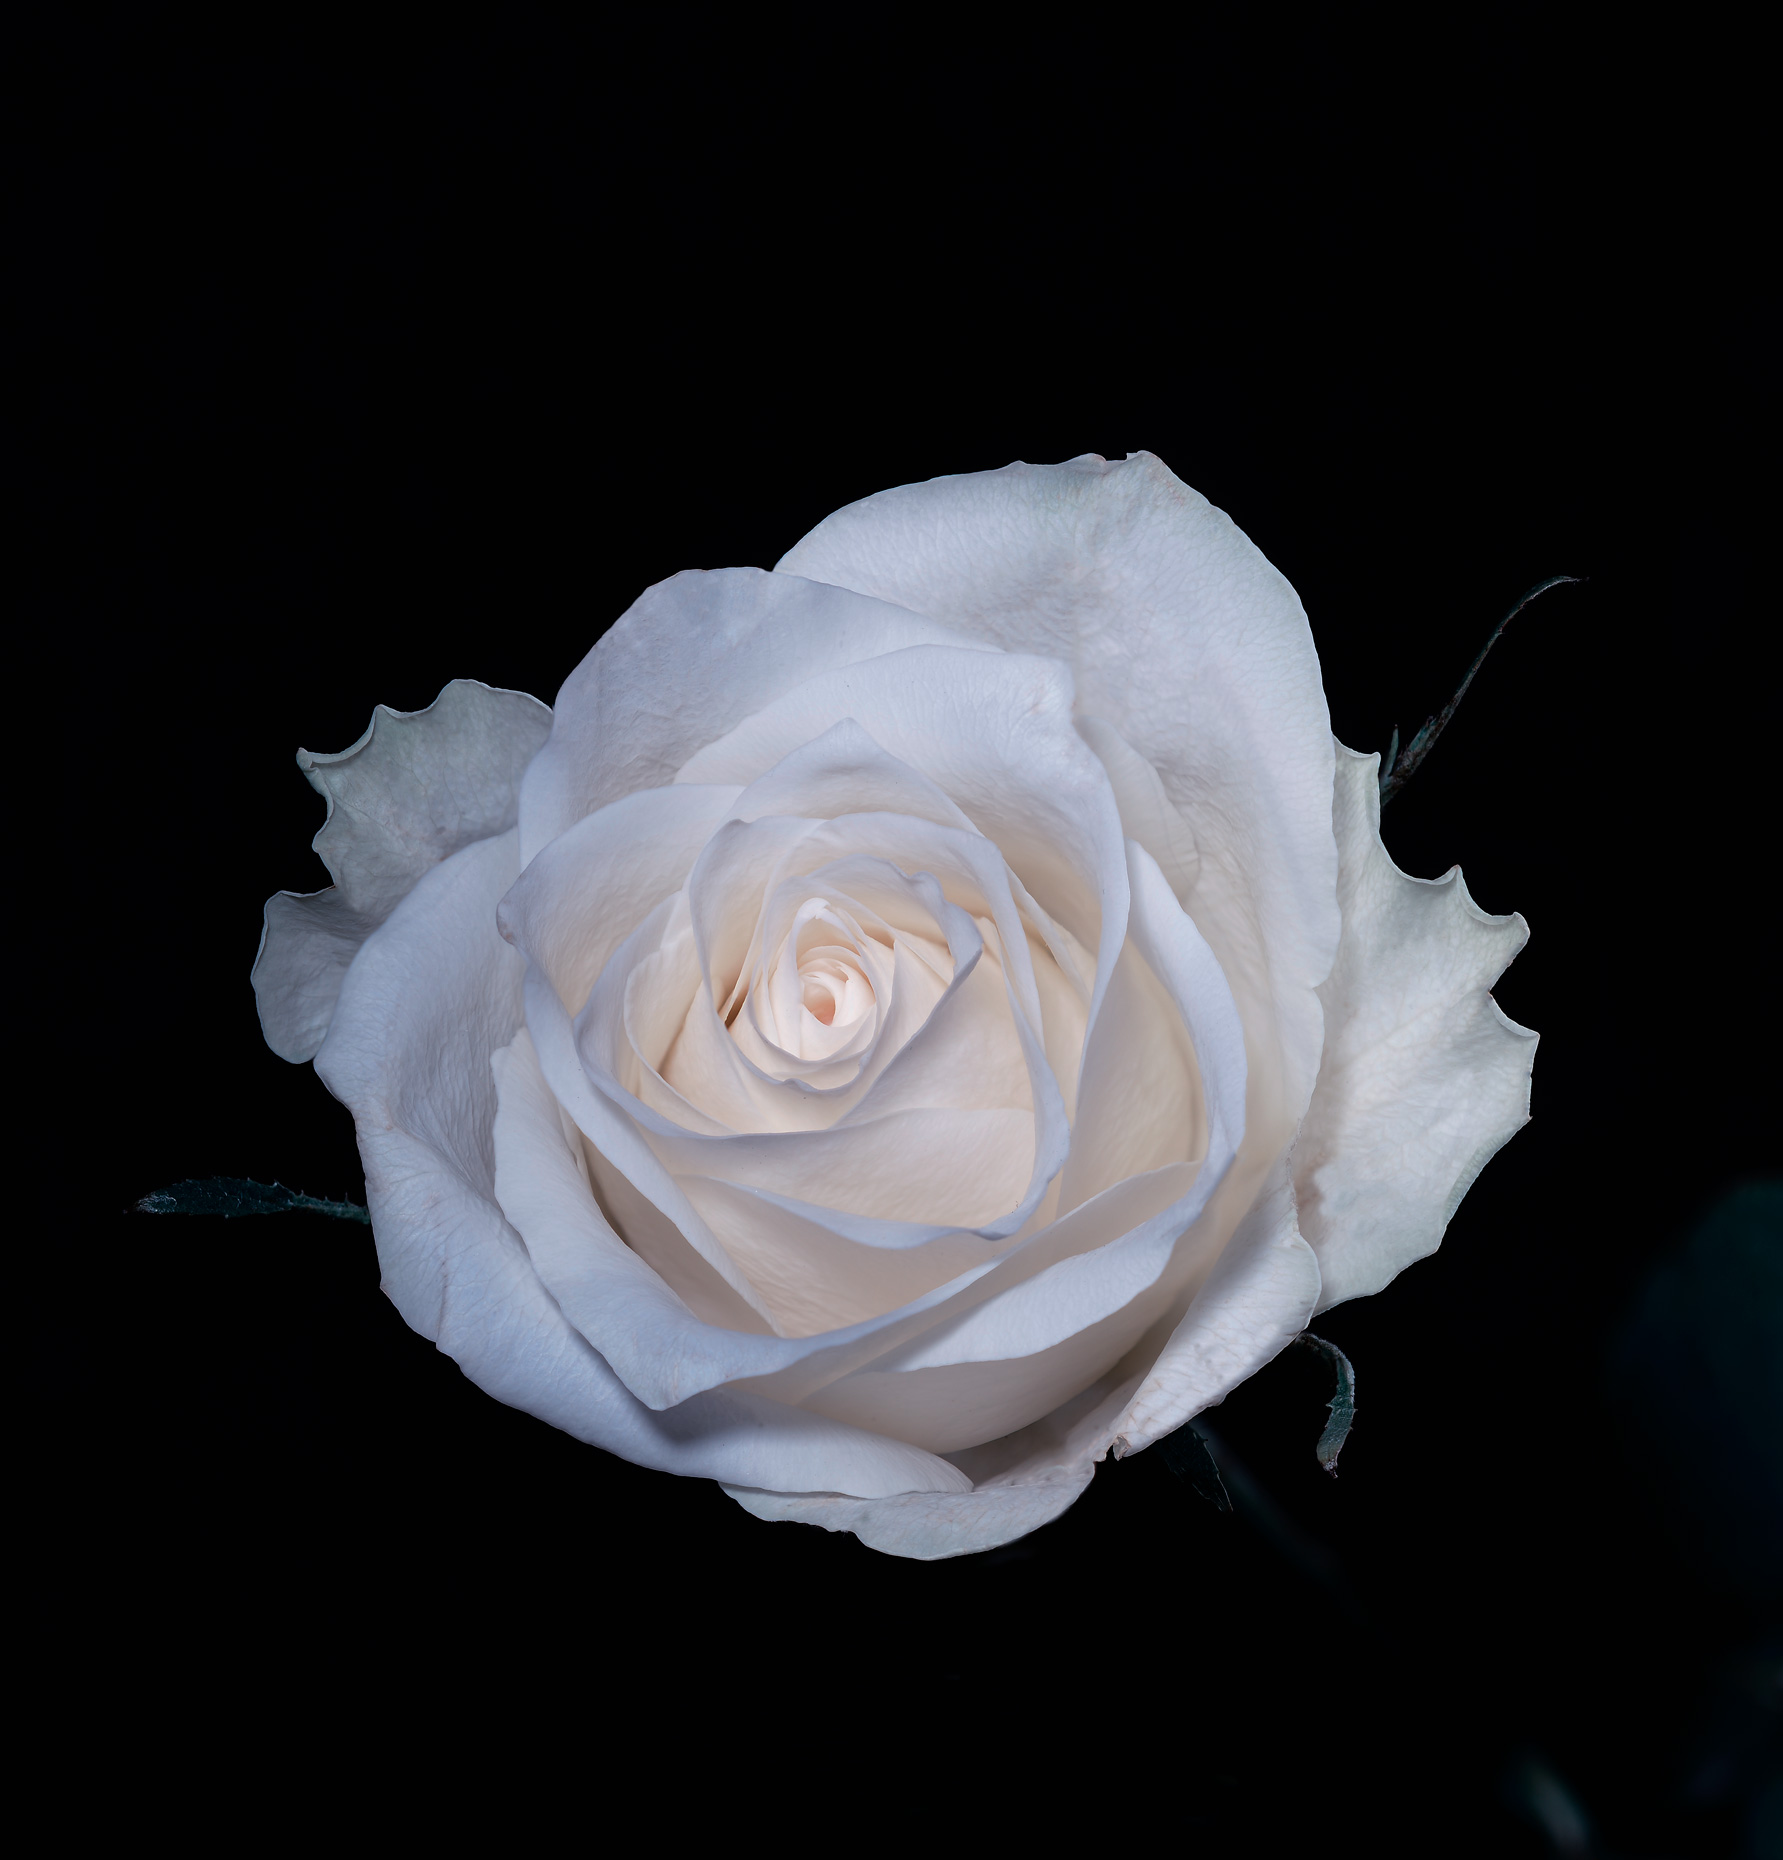 white-rose-view-1-crop-styledweb.jpg